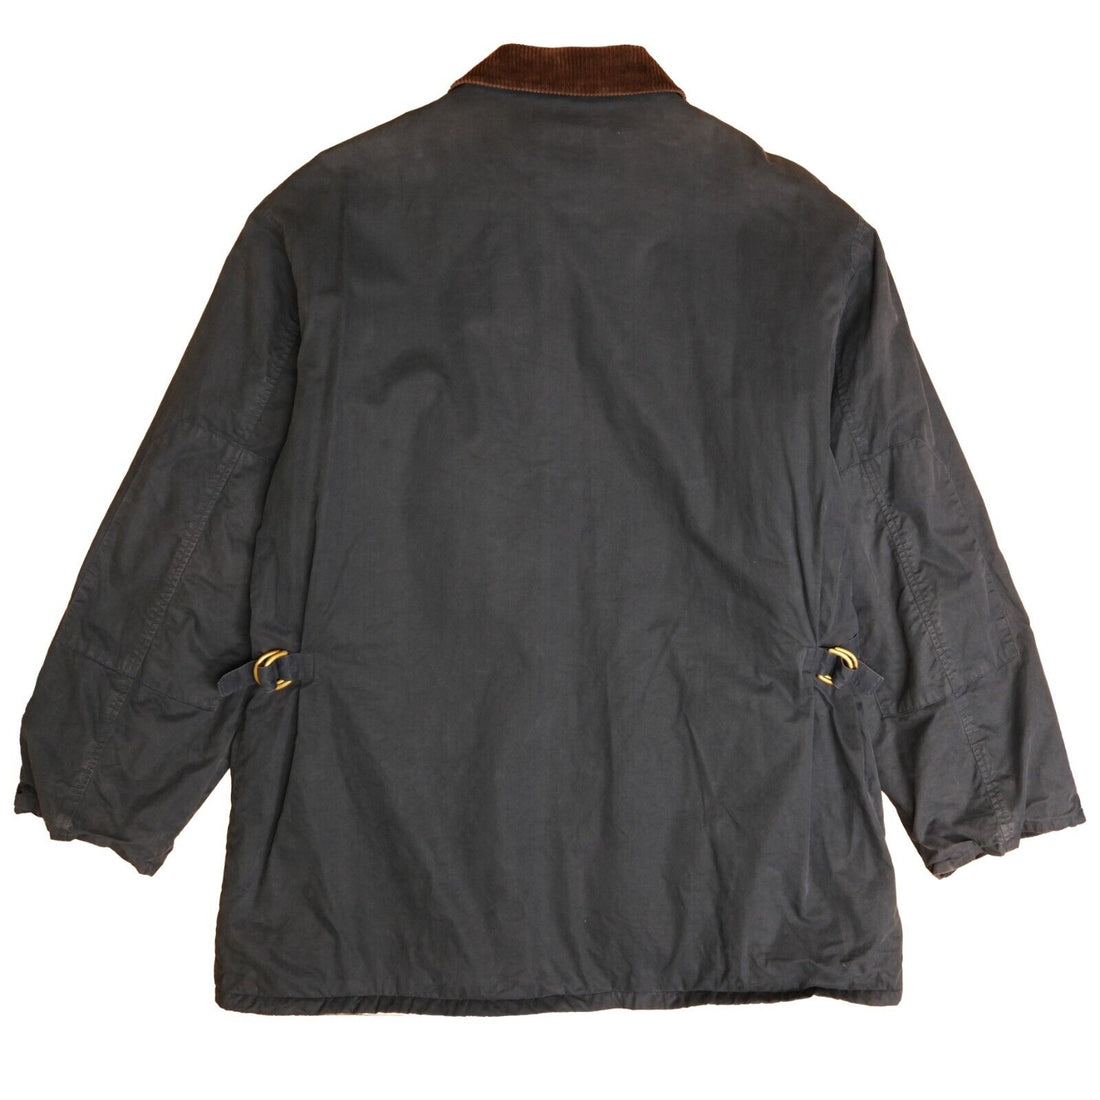 Vintage Burberrys Chore Coat Jacket Size Large Blue Plaid Lined